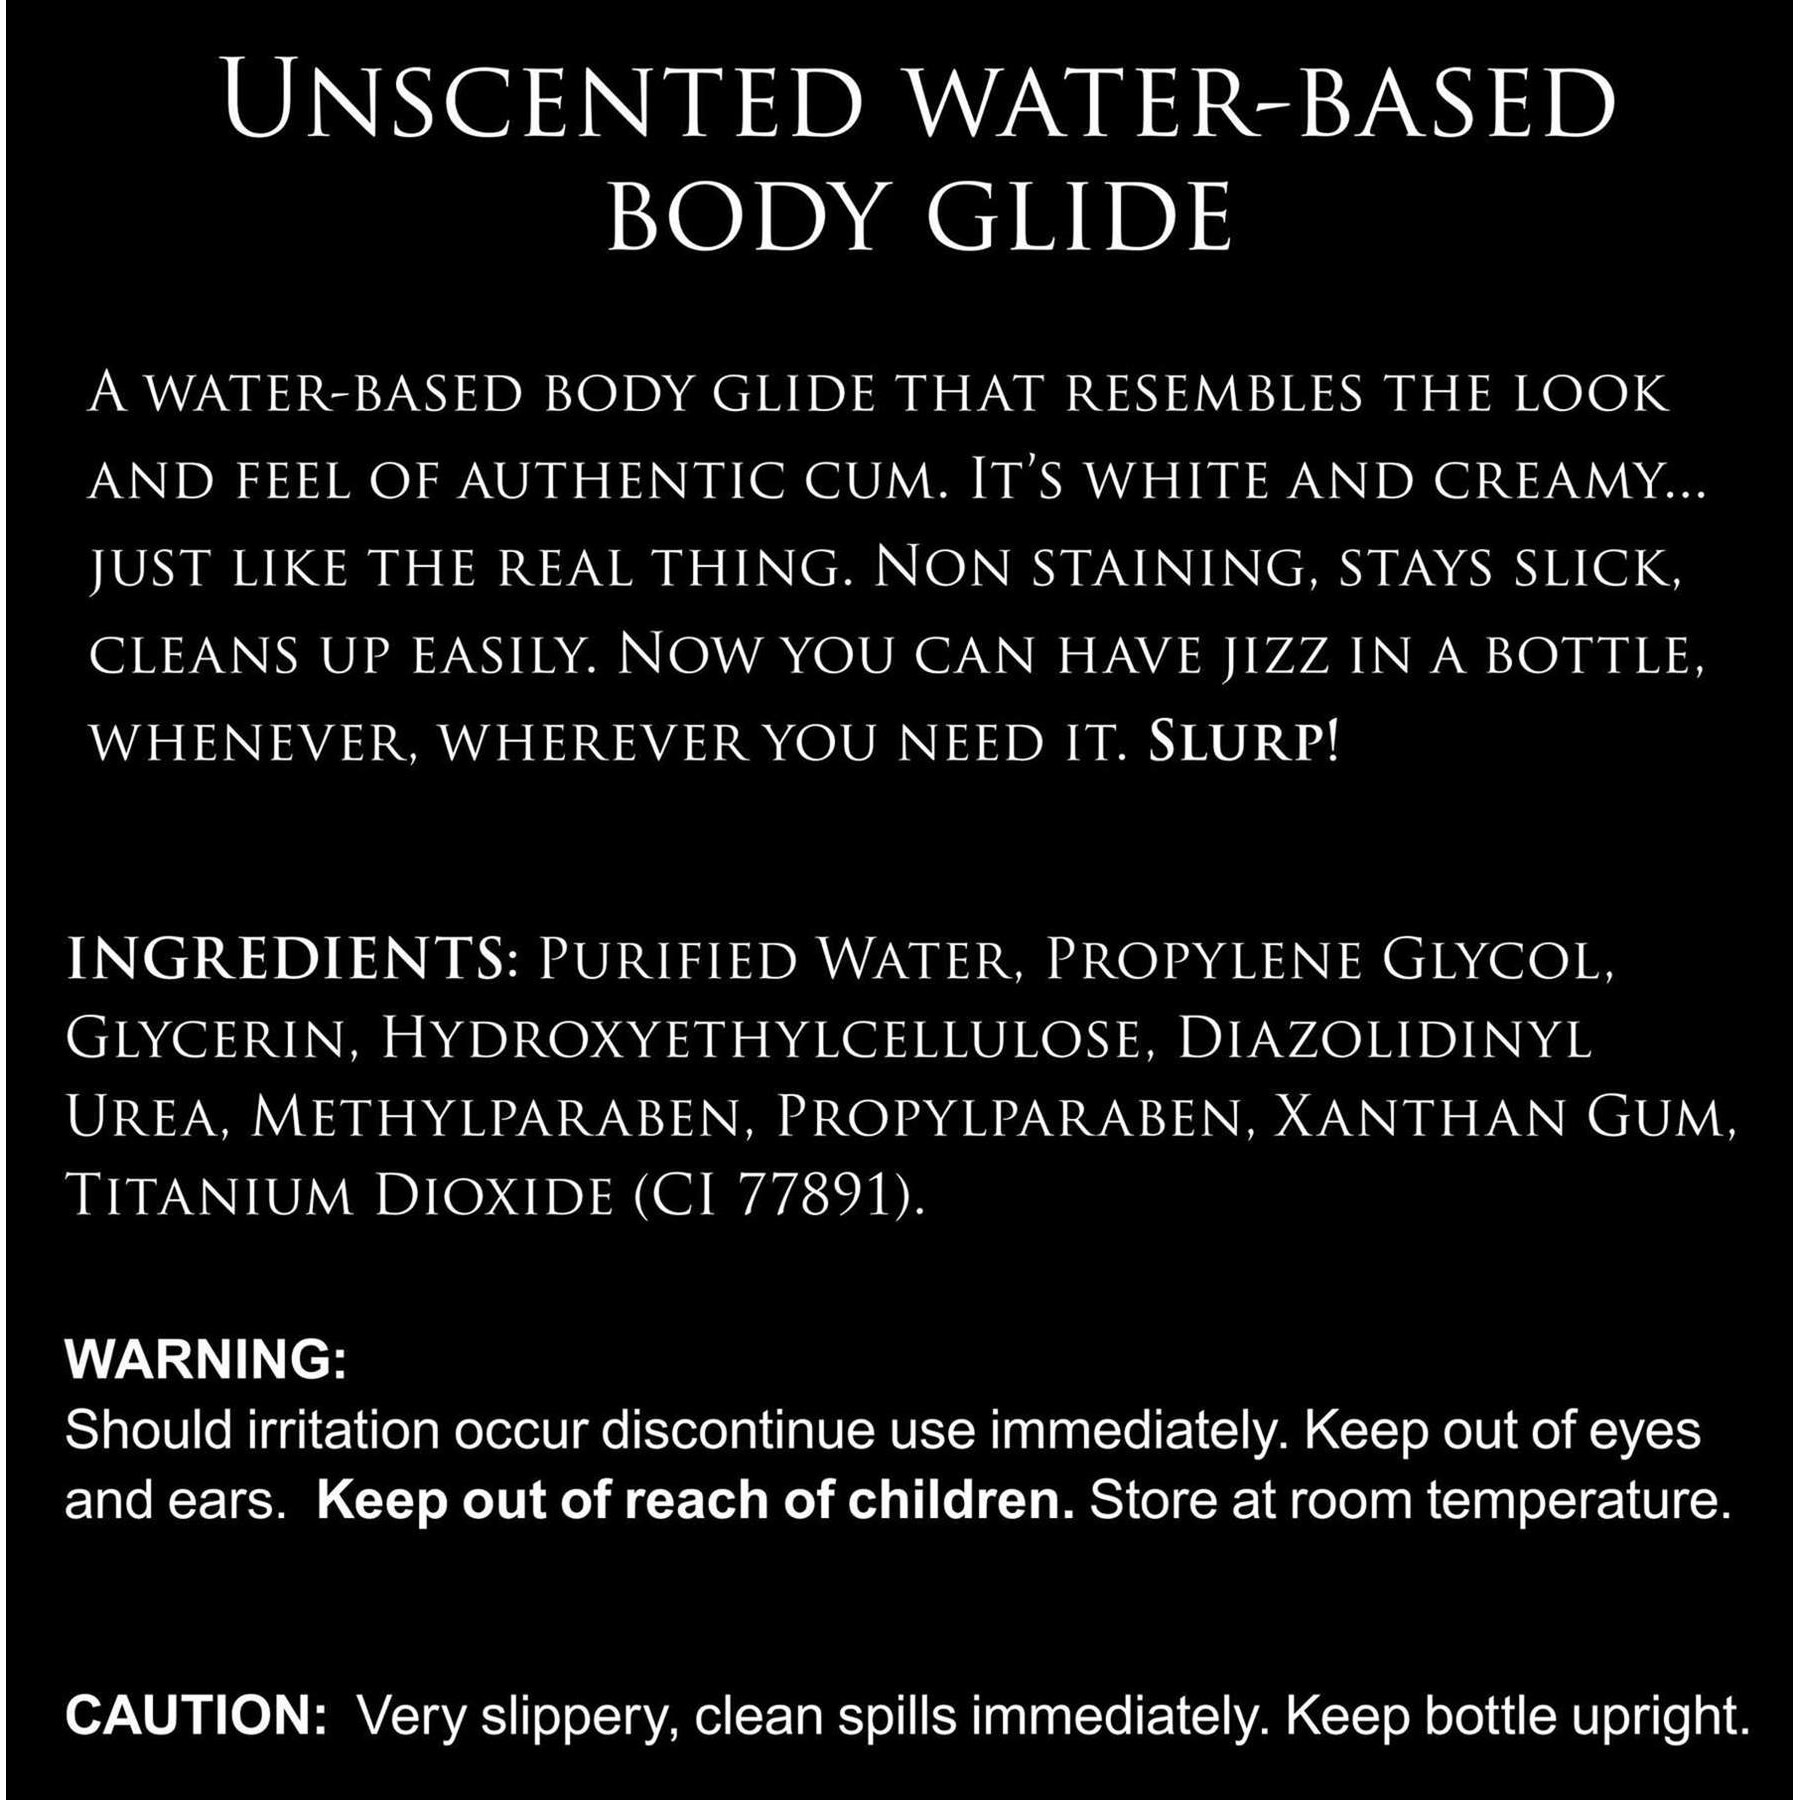 Jizz Water Based Unscented Cum-Like Body Glide sinbgedients